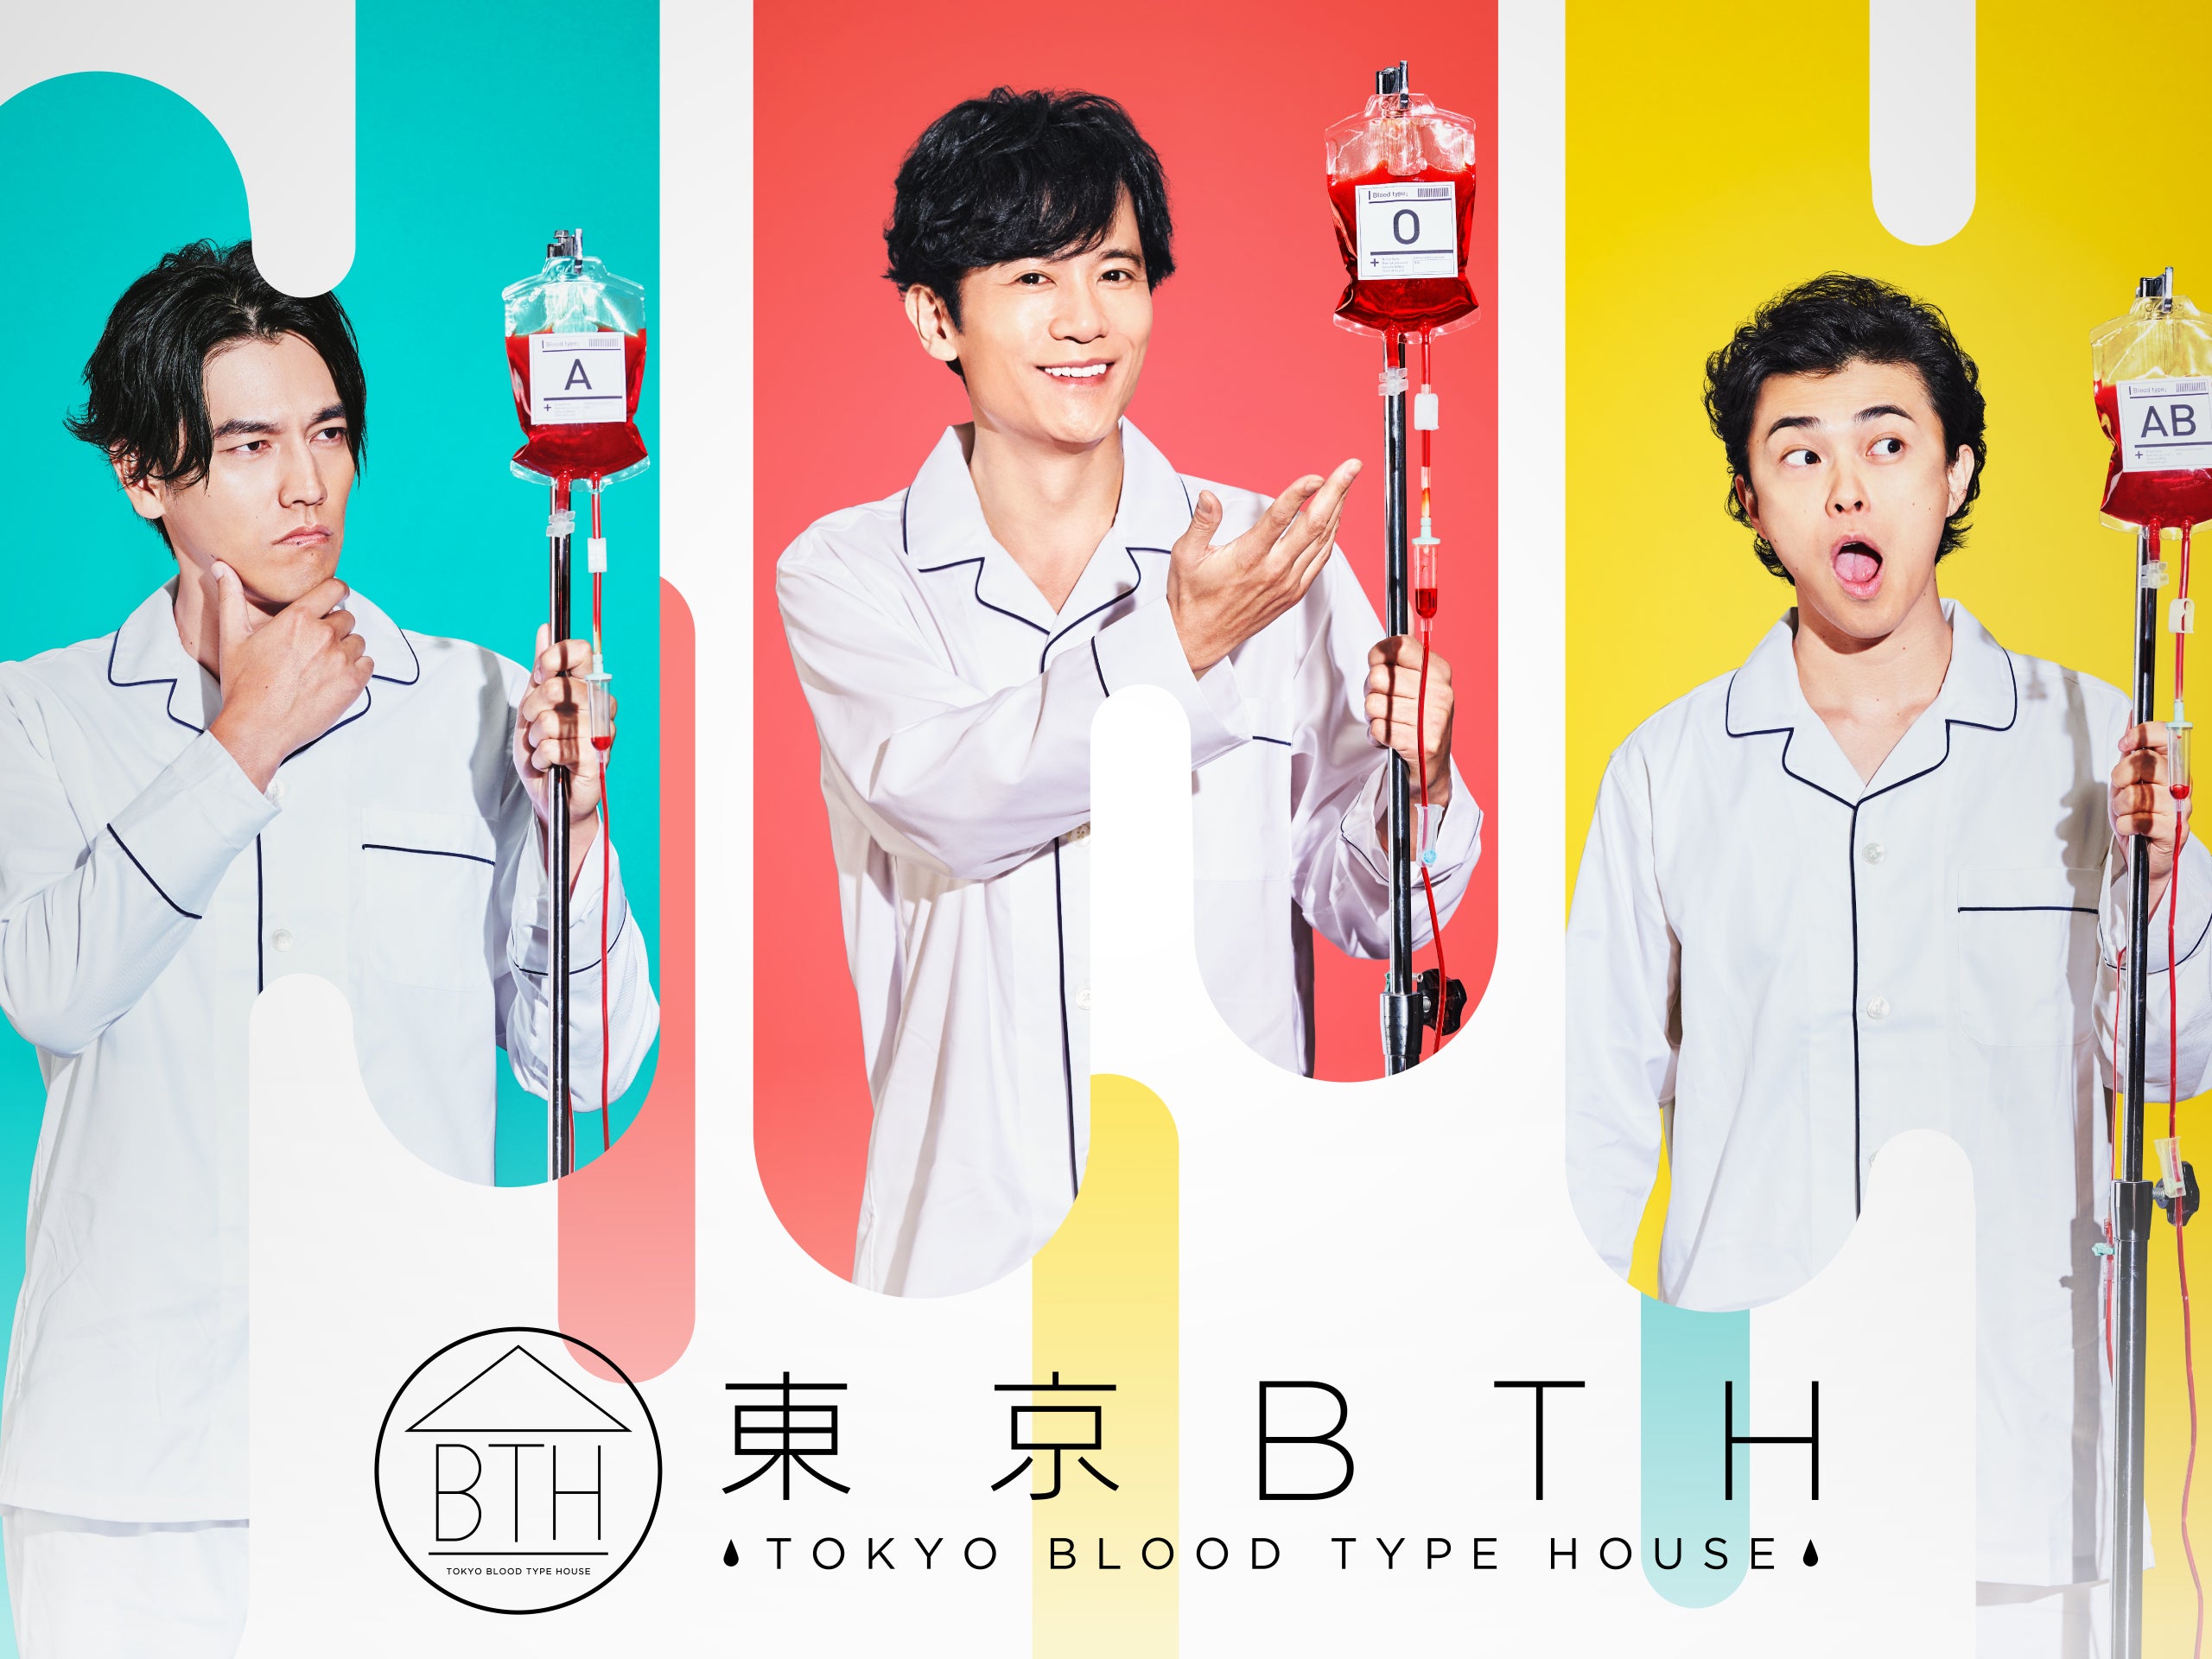 TV ratings for Tokyo Bth: Tokyo Blood Type House (東京BTH〜TOKYO BLOOD TYPE HOUSE〜) in Brazil. Amazon Prime Video TV series